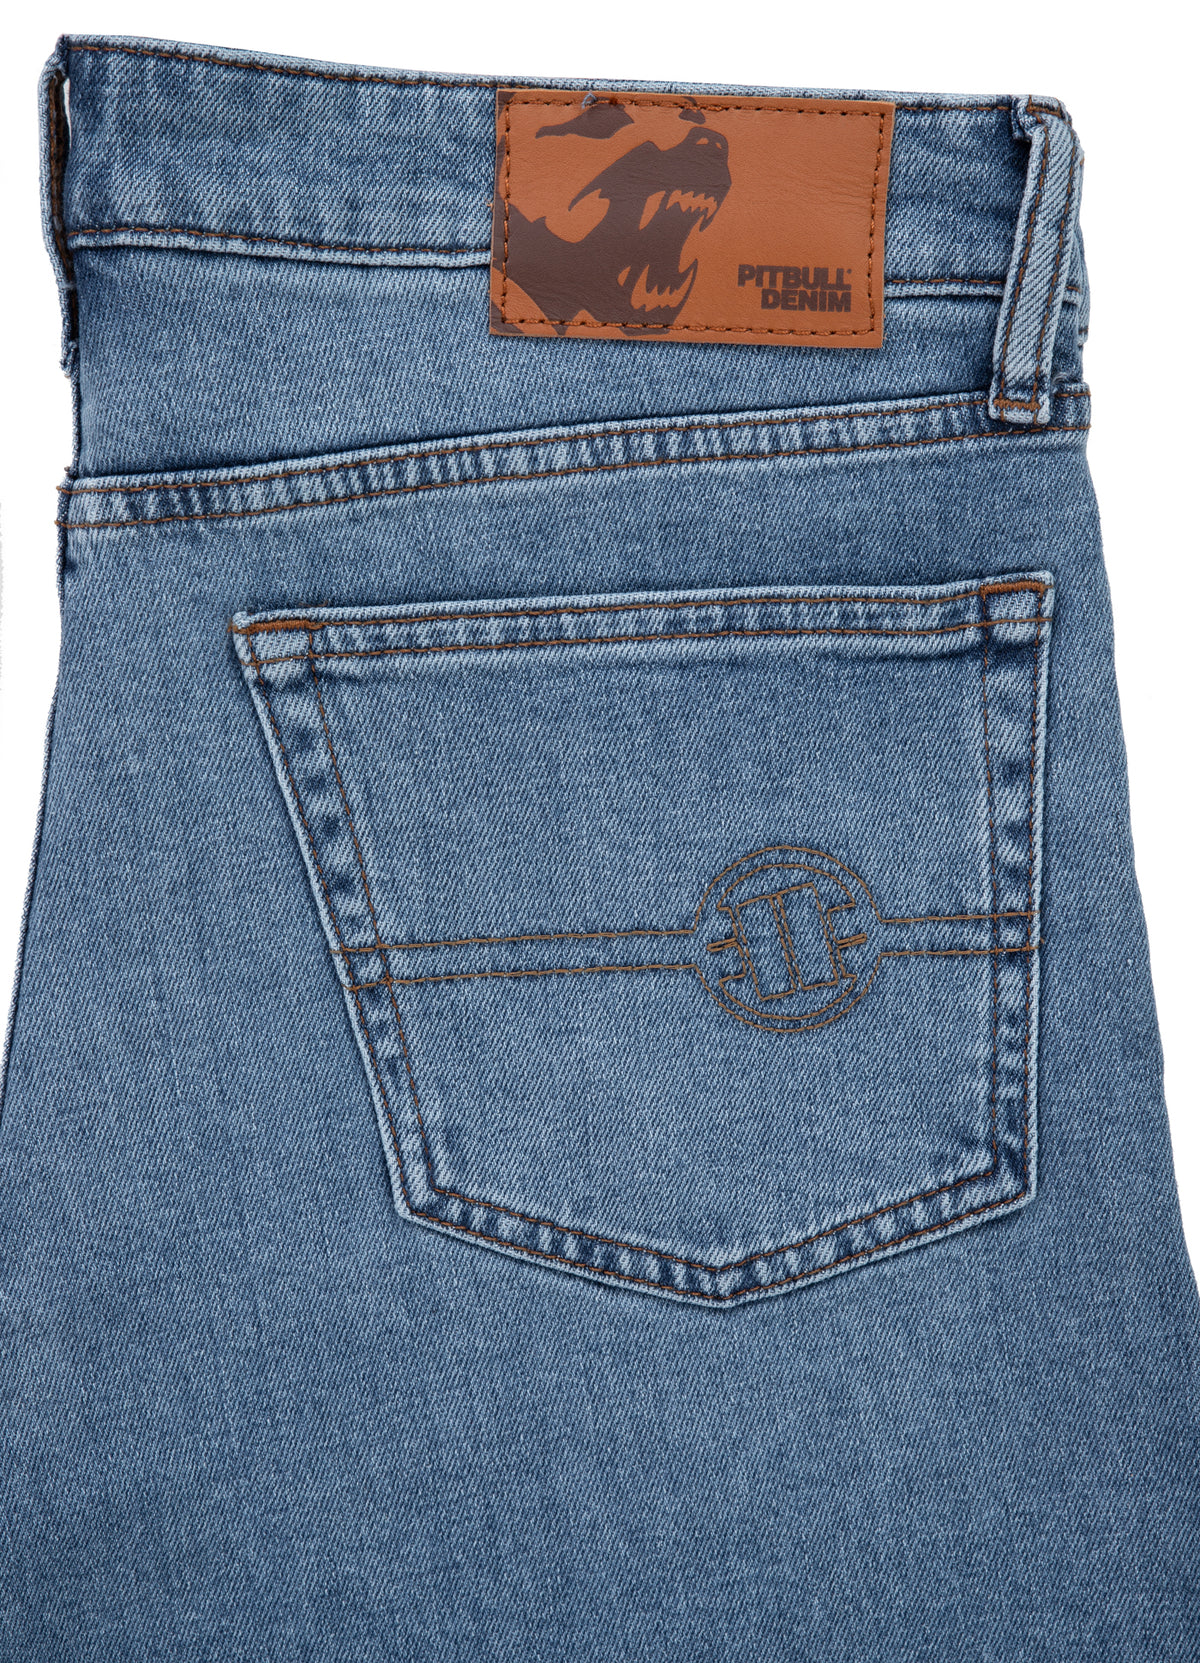 HIGHLANDER Classic Wash Jeans Shorts